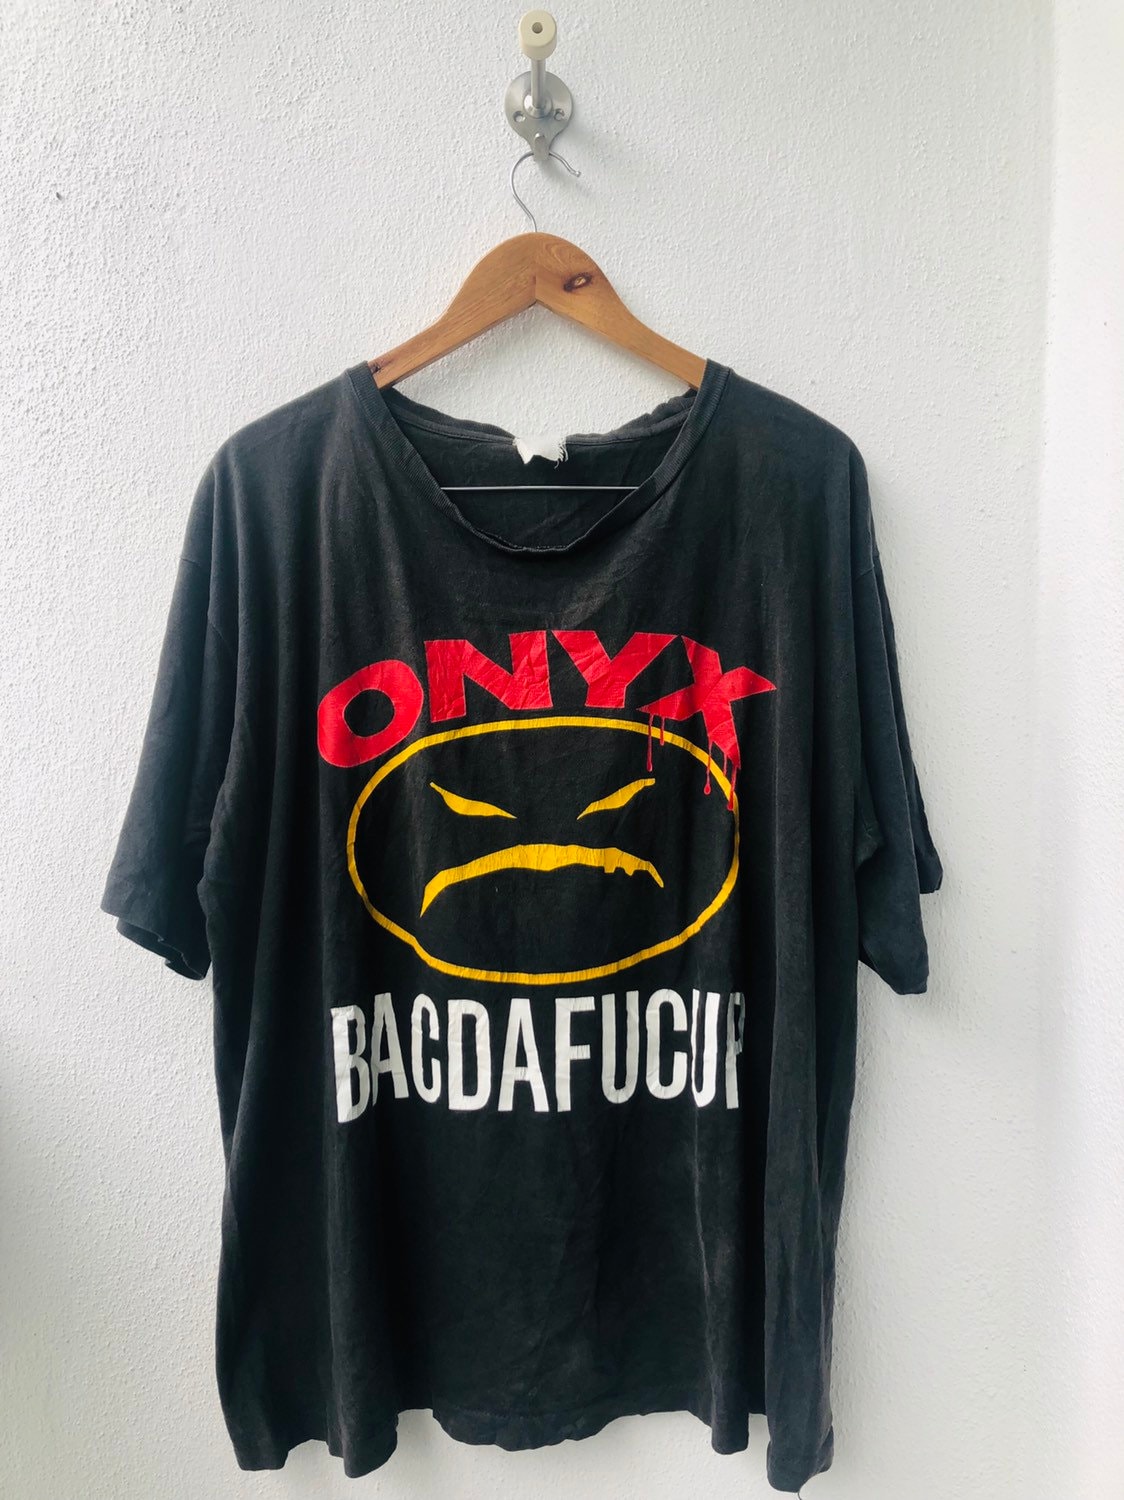 Vintage Original 90s Onyx Bacdafucup 1993 by JMJ Records American ...